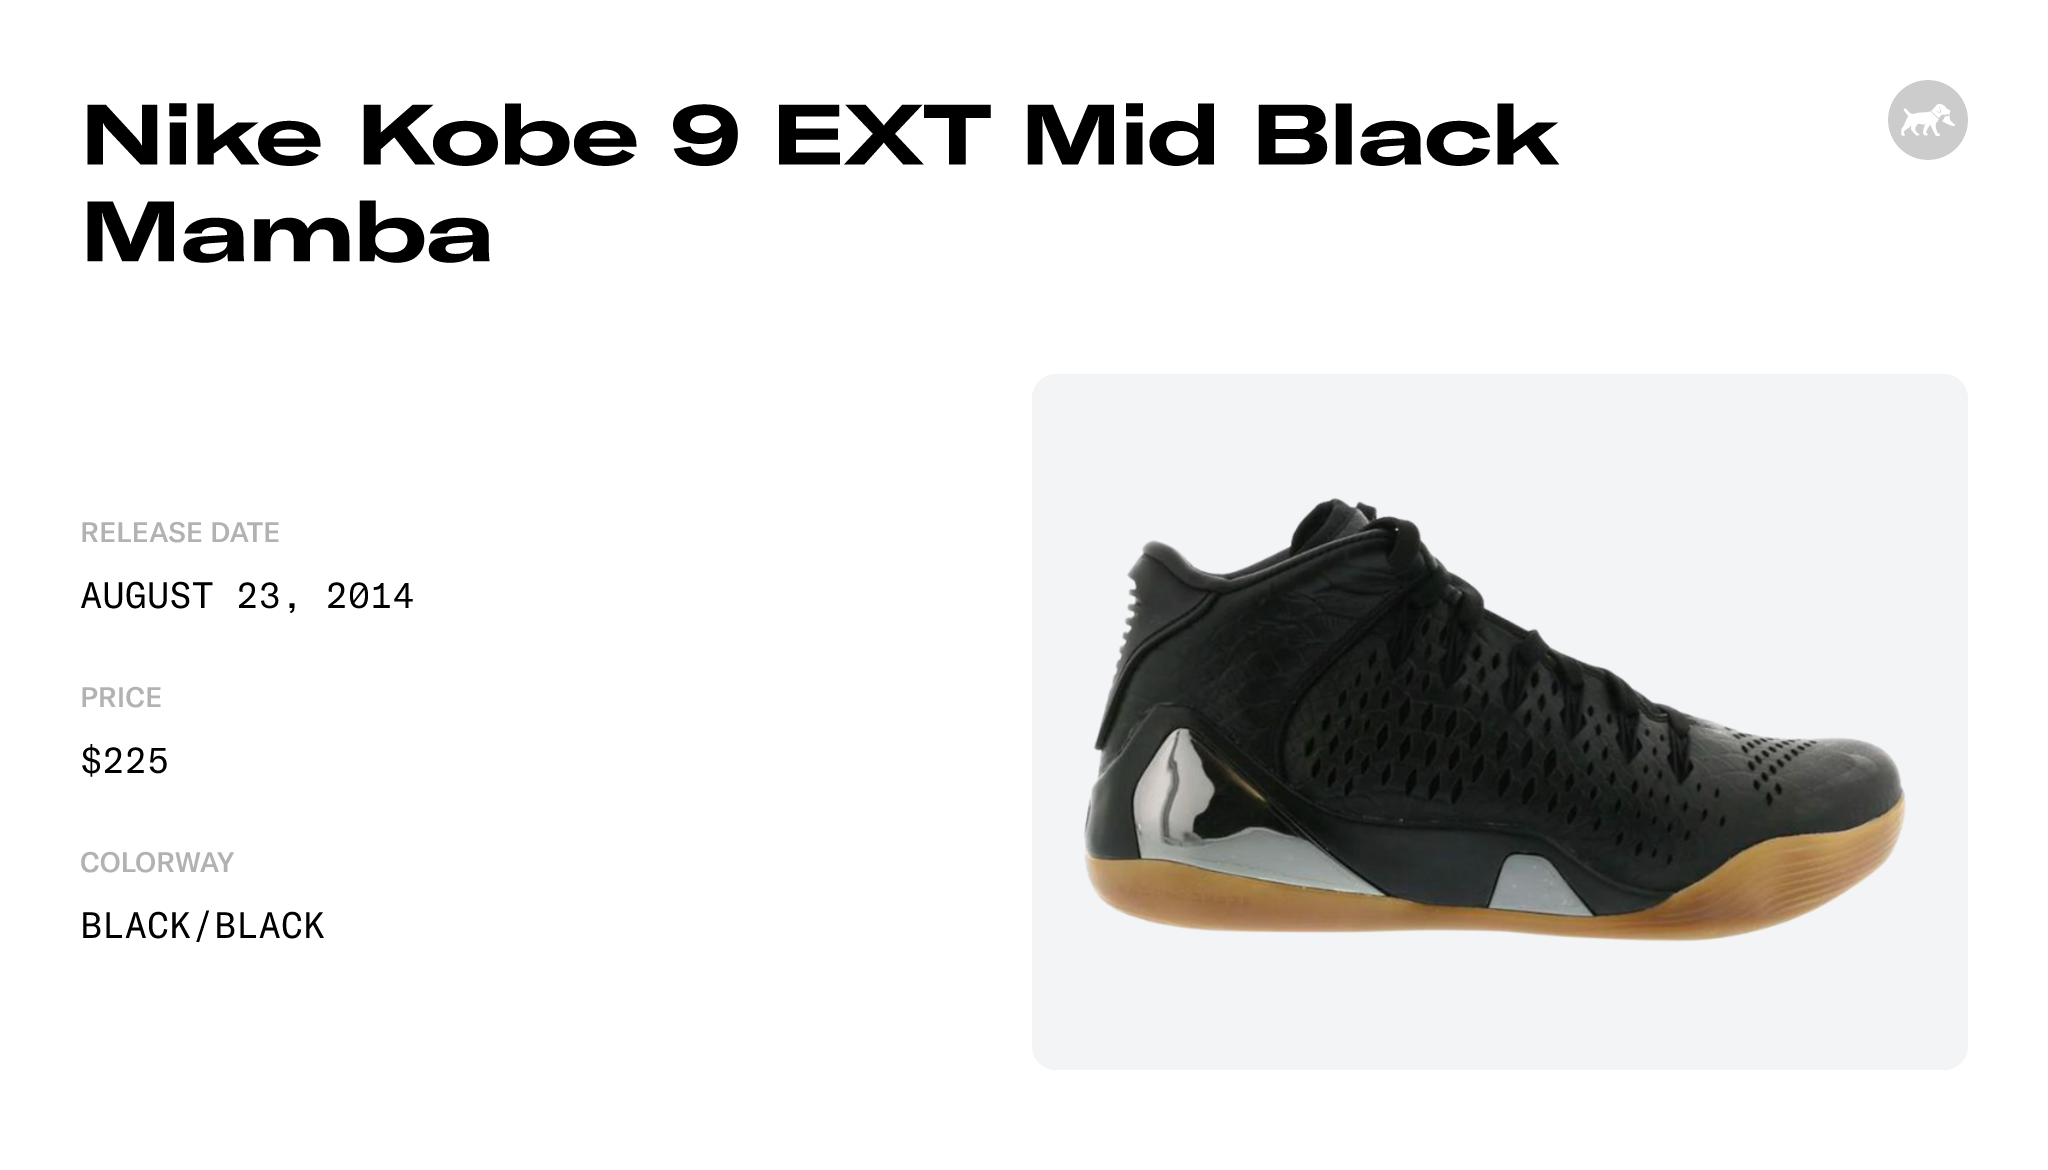 Nike Kobe 9 EXT Mid Black Mamba - 704286-001 Raffles and Release Date